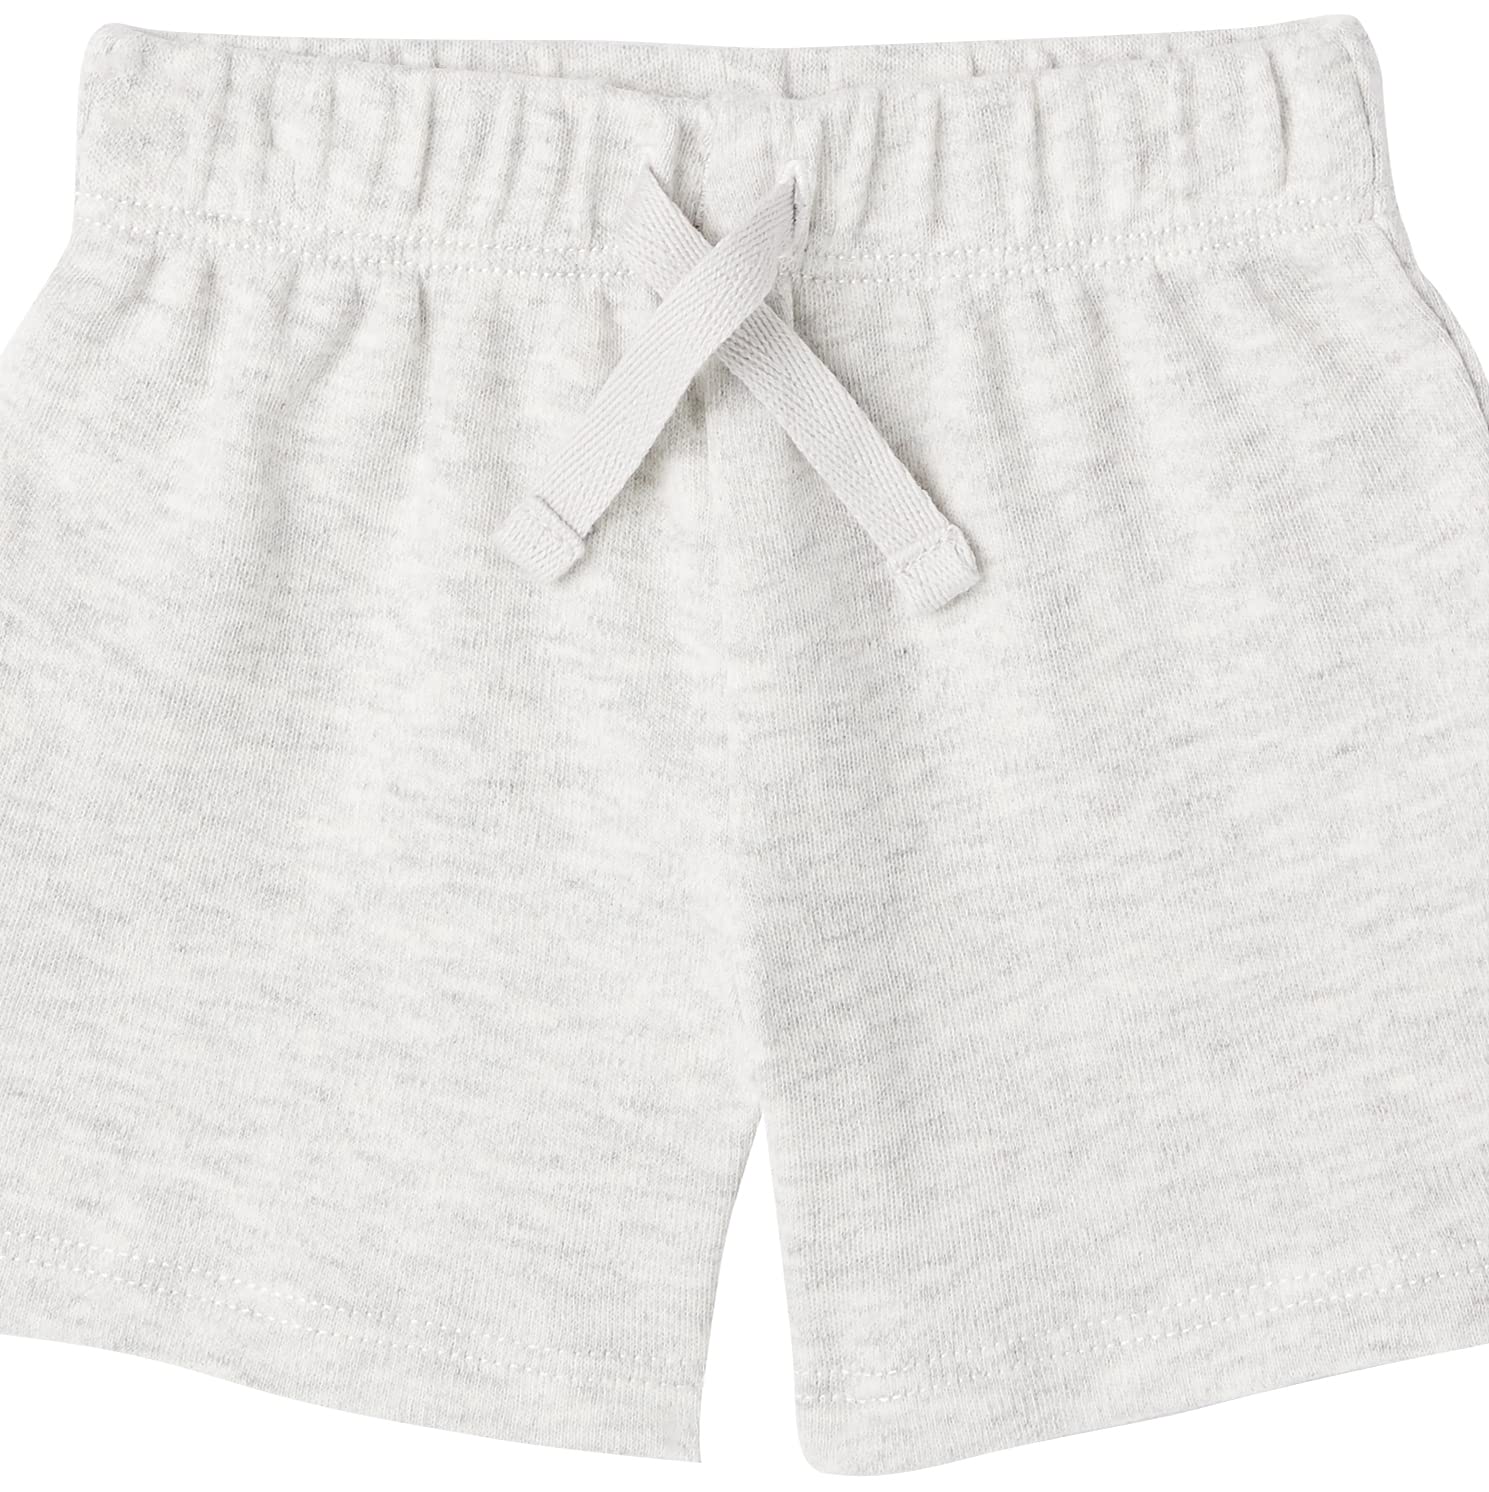 Amazon Essentials Unisex Babies' Cotton Pull-On Shorts, Multipacks